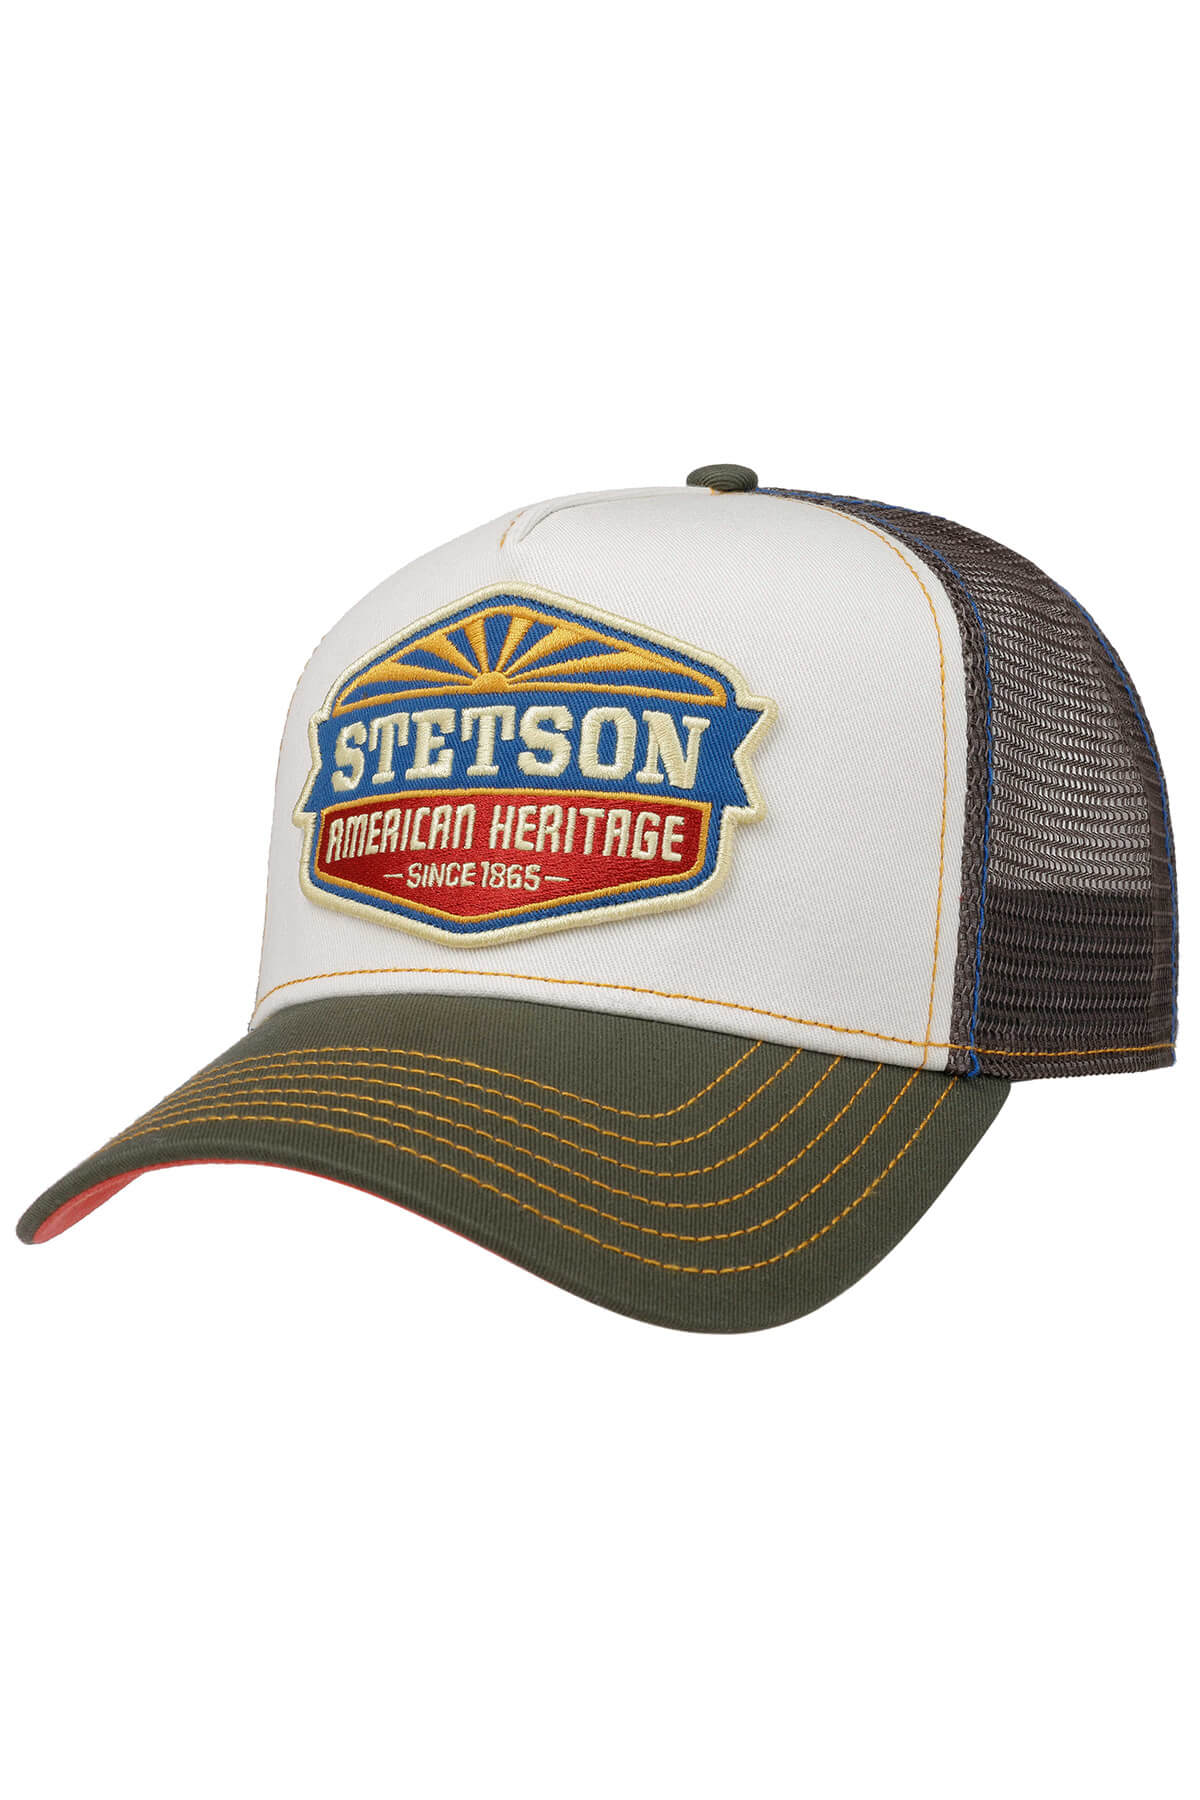 Baseballcap Trucker Cap Sun Baseballcap Stetson 